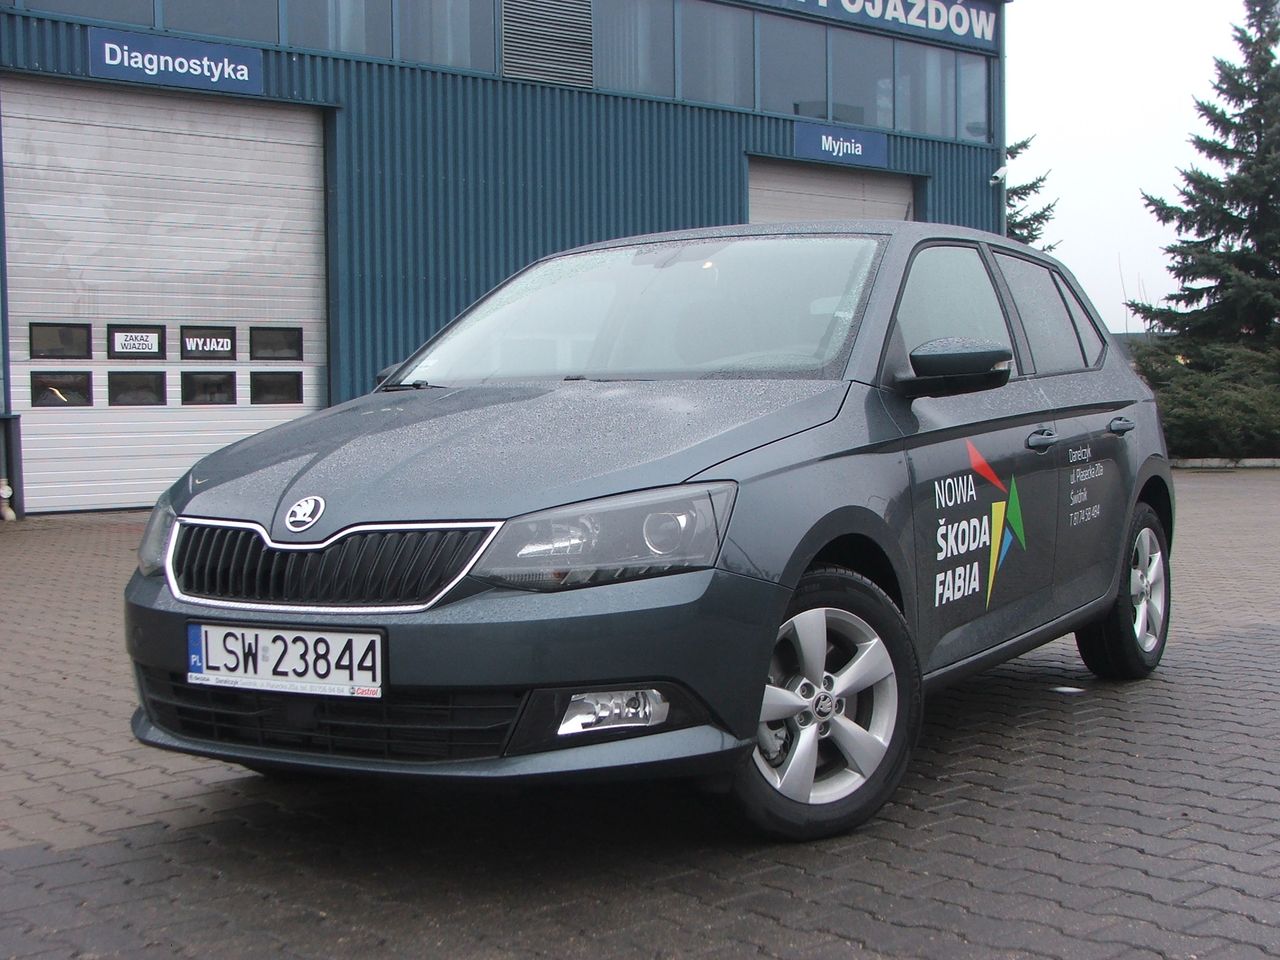 Maciek testuje - Škoda Fabia III